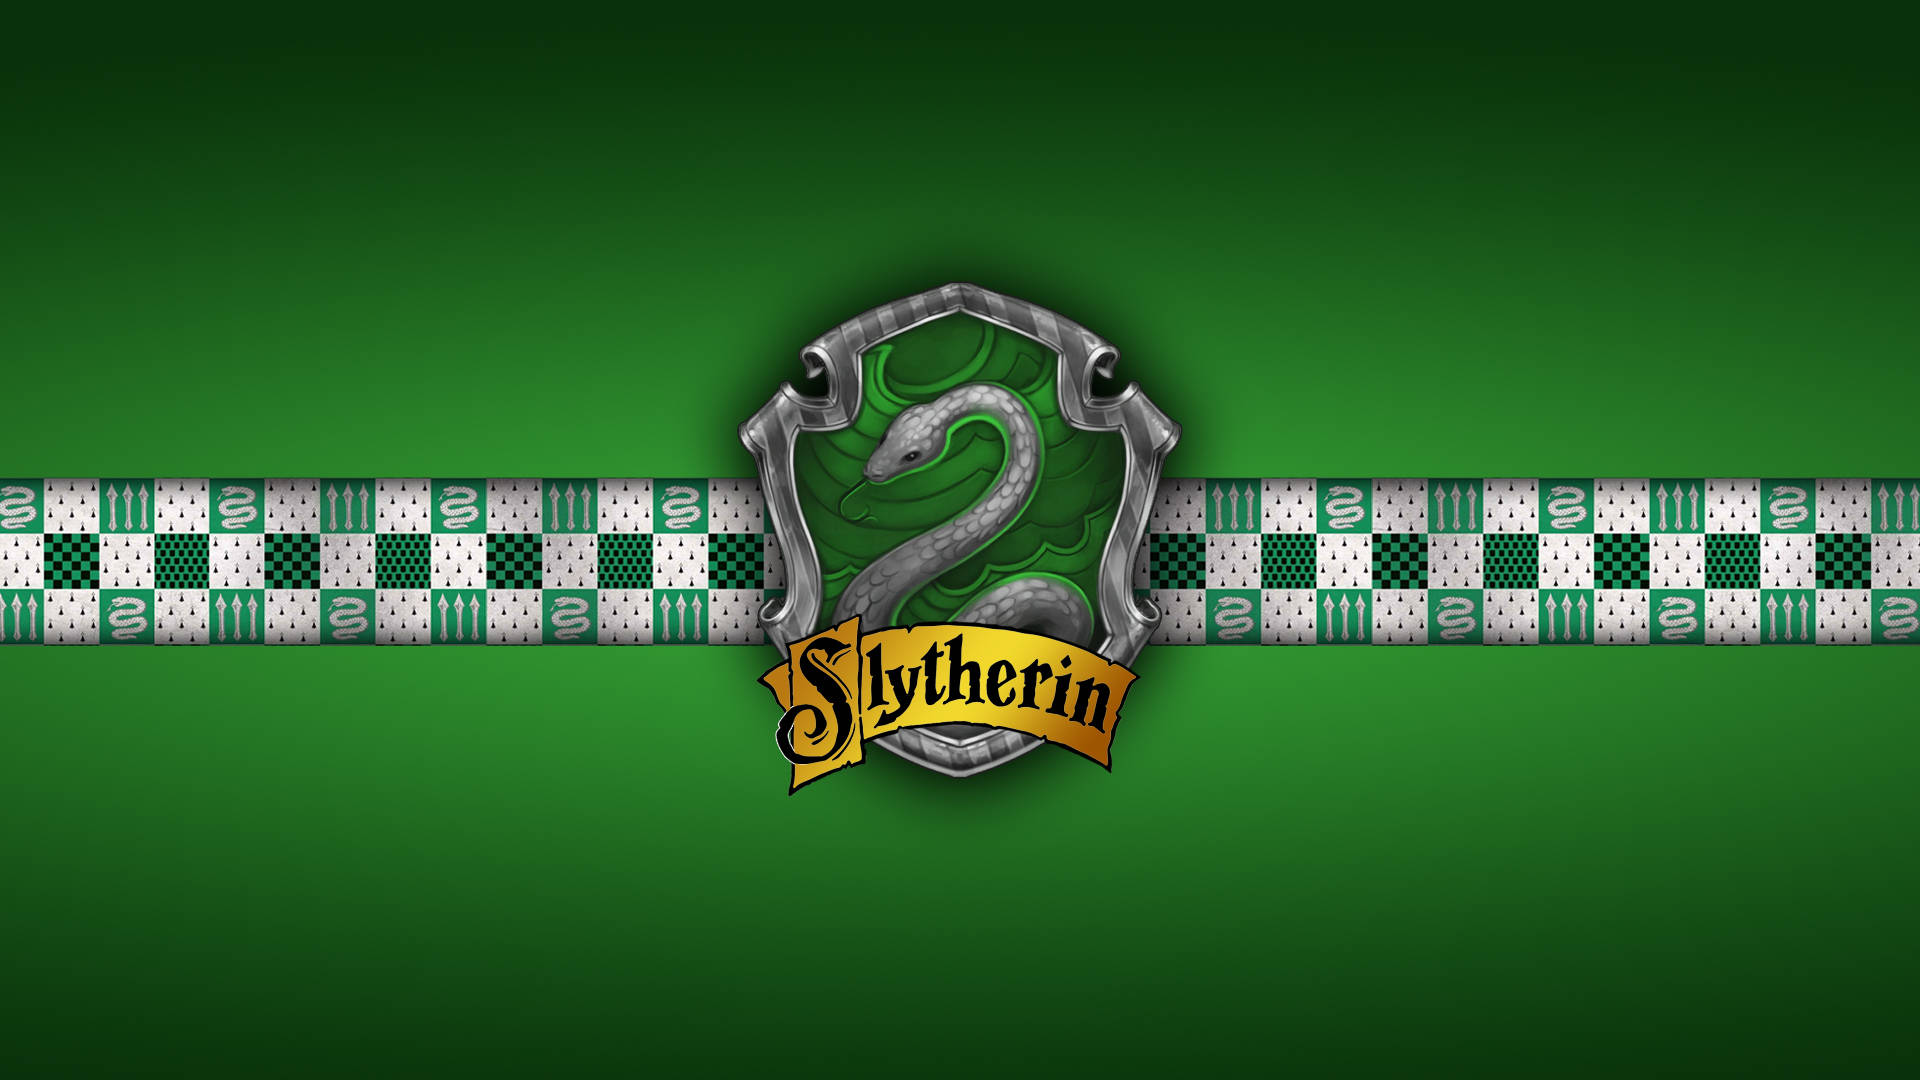 Harry Potter Houses Slytherin Green